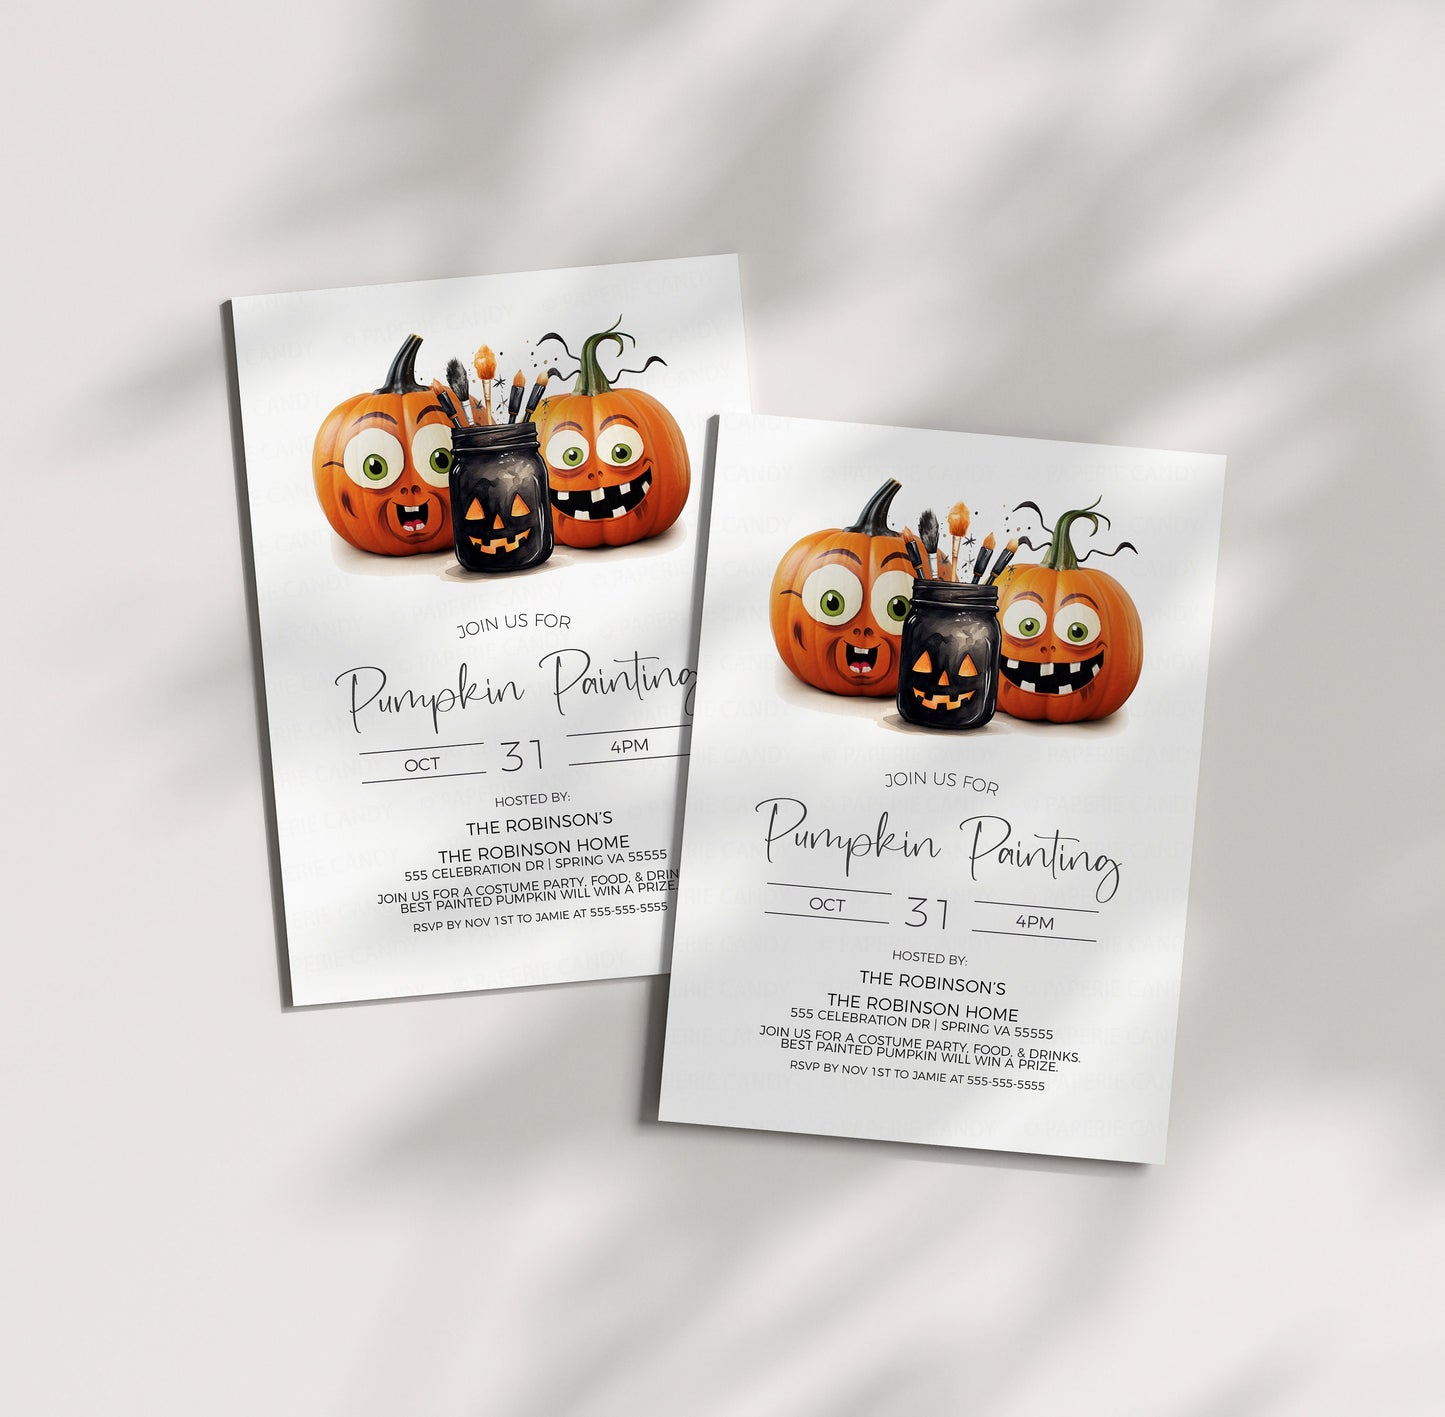 Pumpkin Painting Party Invitation, Jack-o-lantern Painting Party Invite, Kids Halloween Party, Pumpkin Pizza School Event Editable Printable